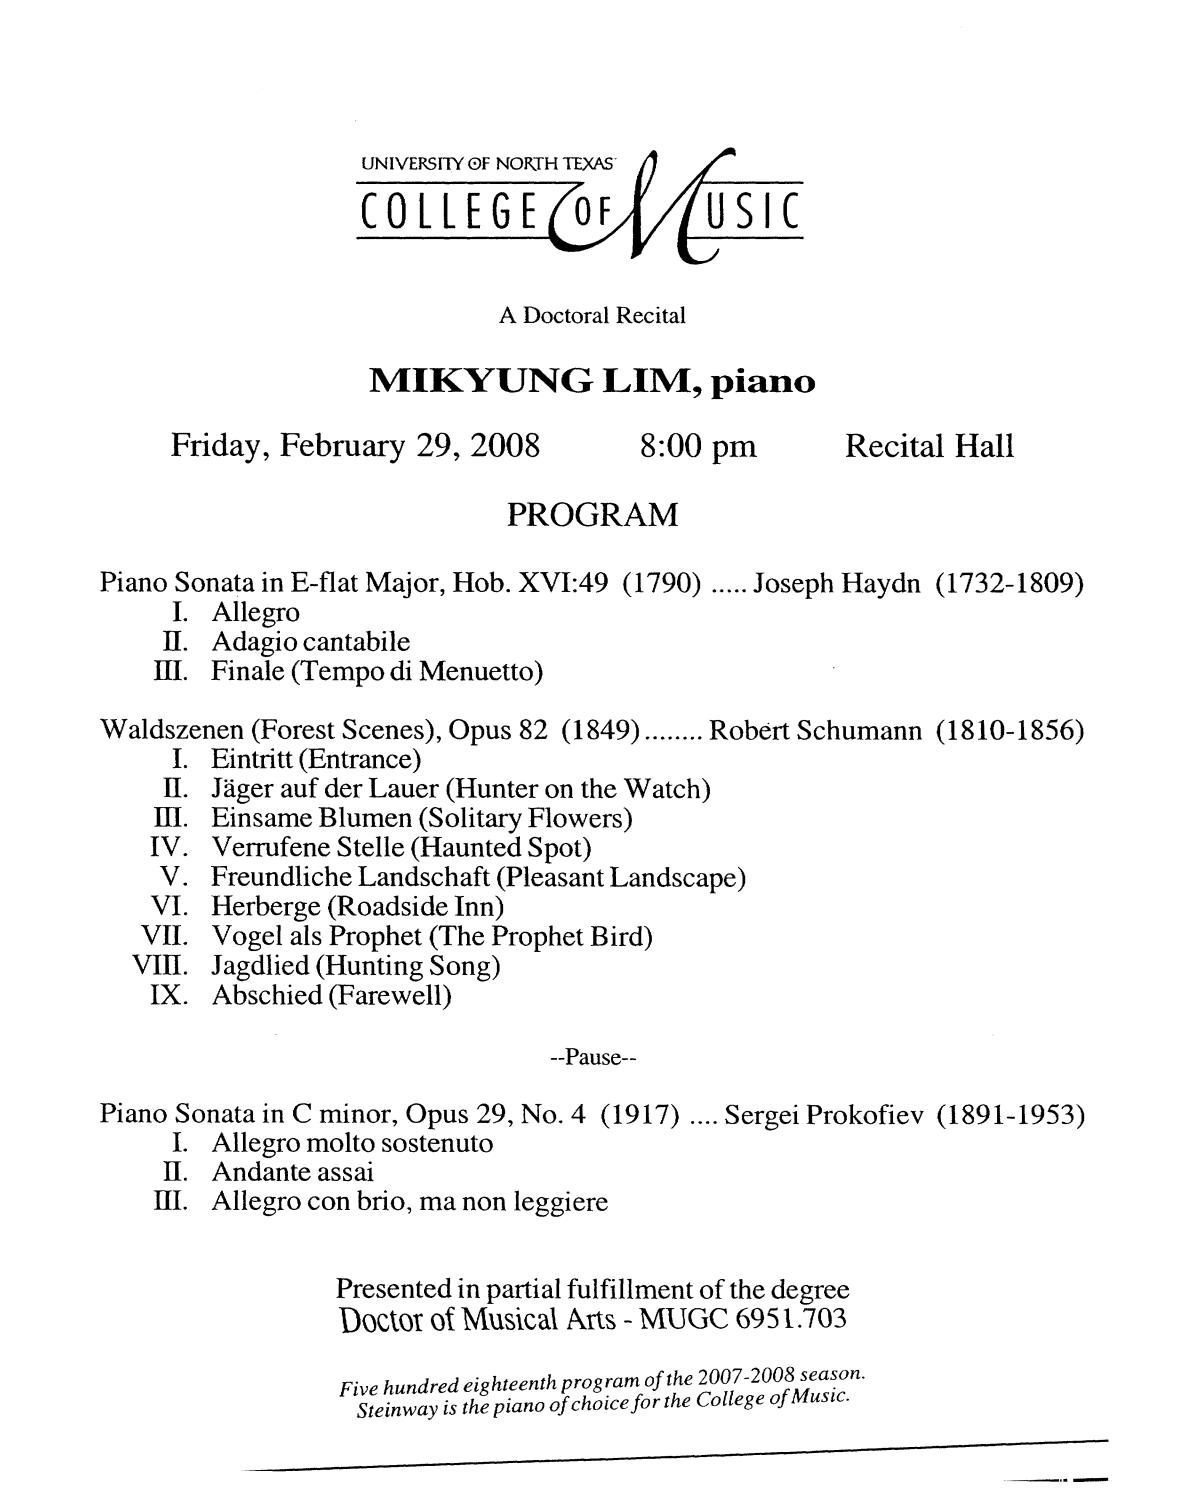 College of Music program book 2007-2008 Student Performances Vol. 2
                                                
                                                    42
                                                